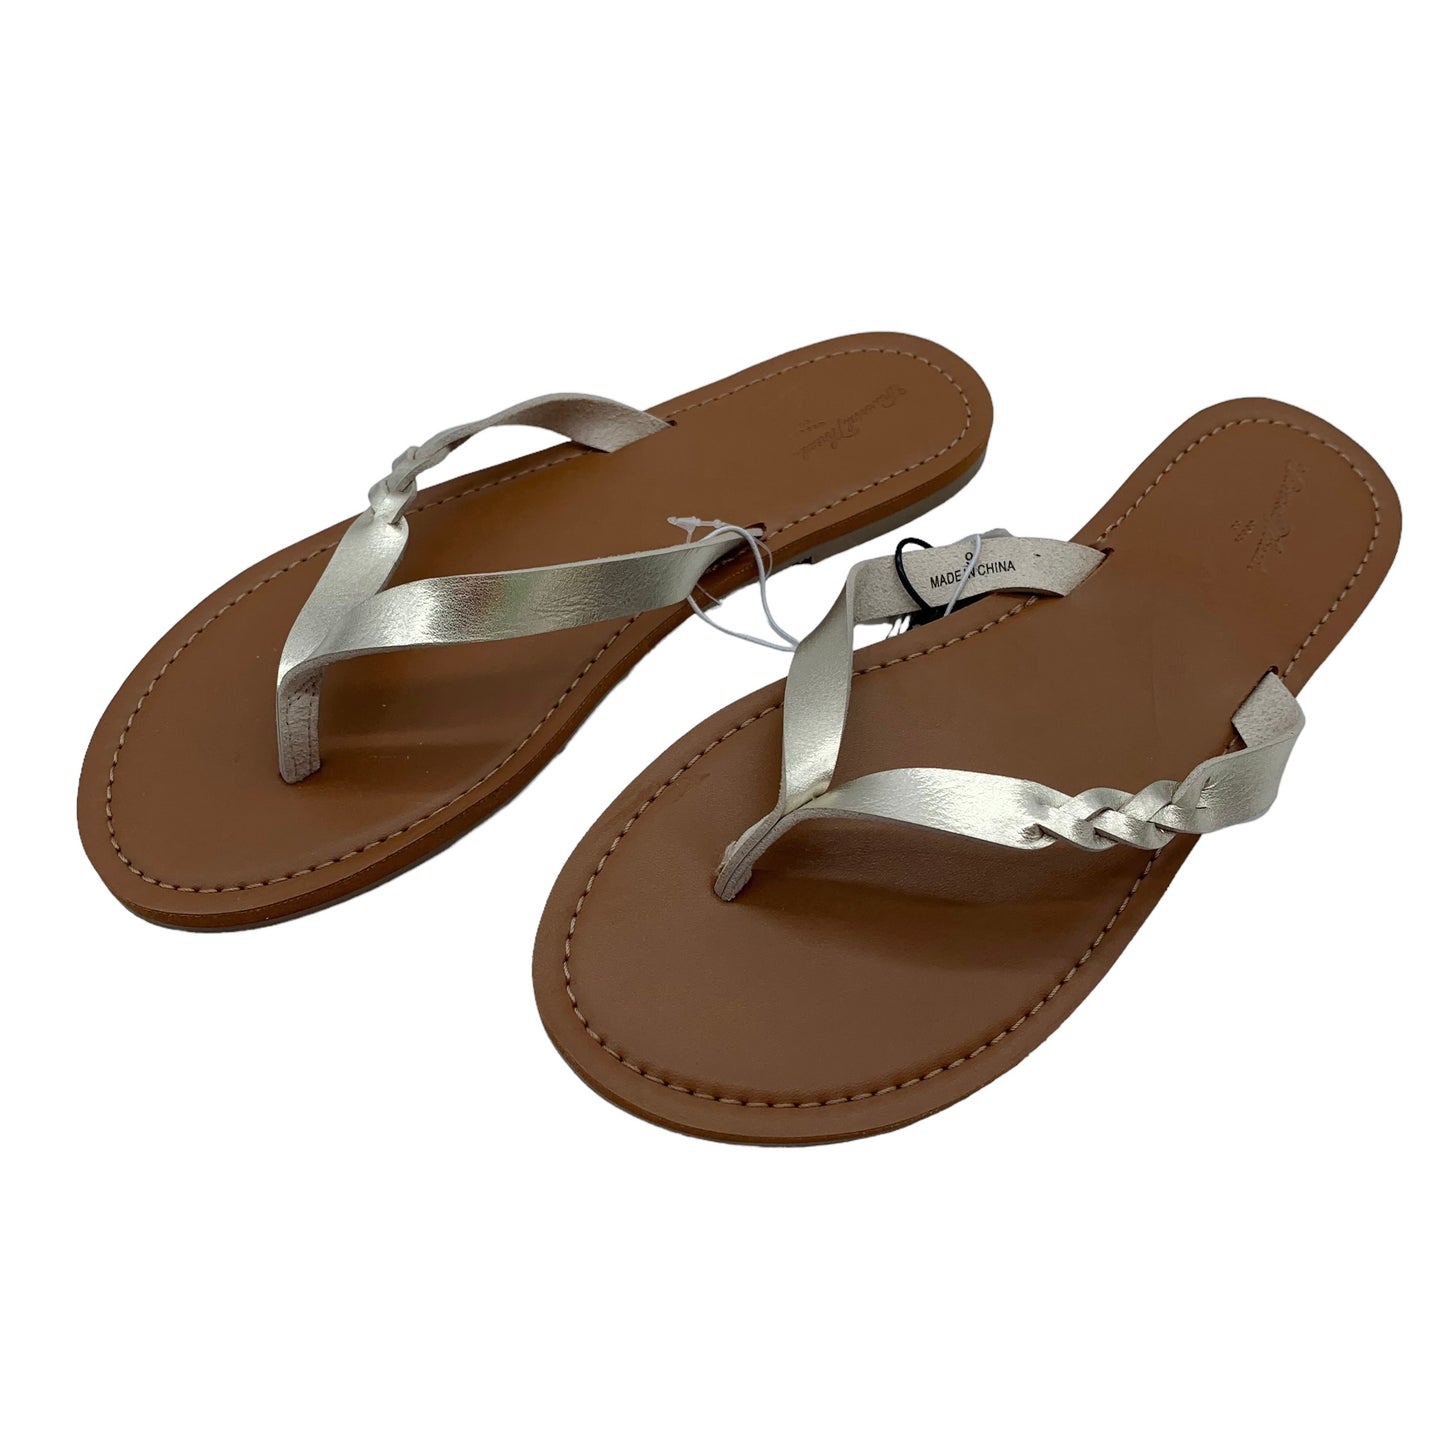 Sandals Flip Flops By Universal Thread  Size: 9